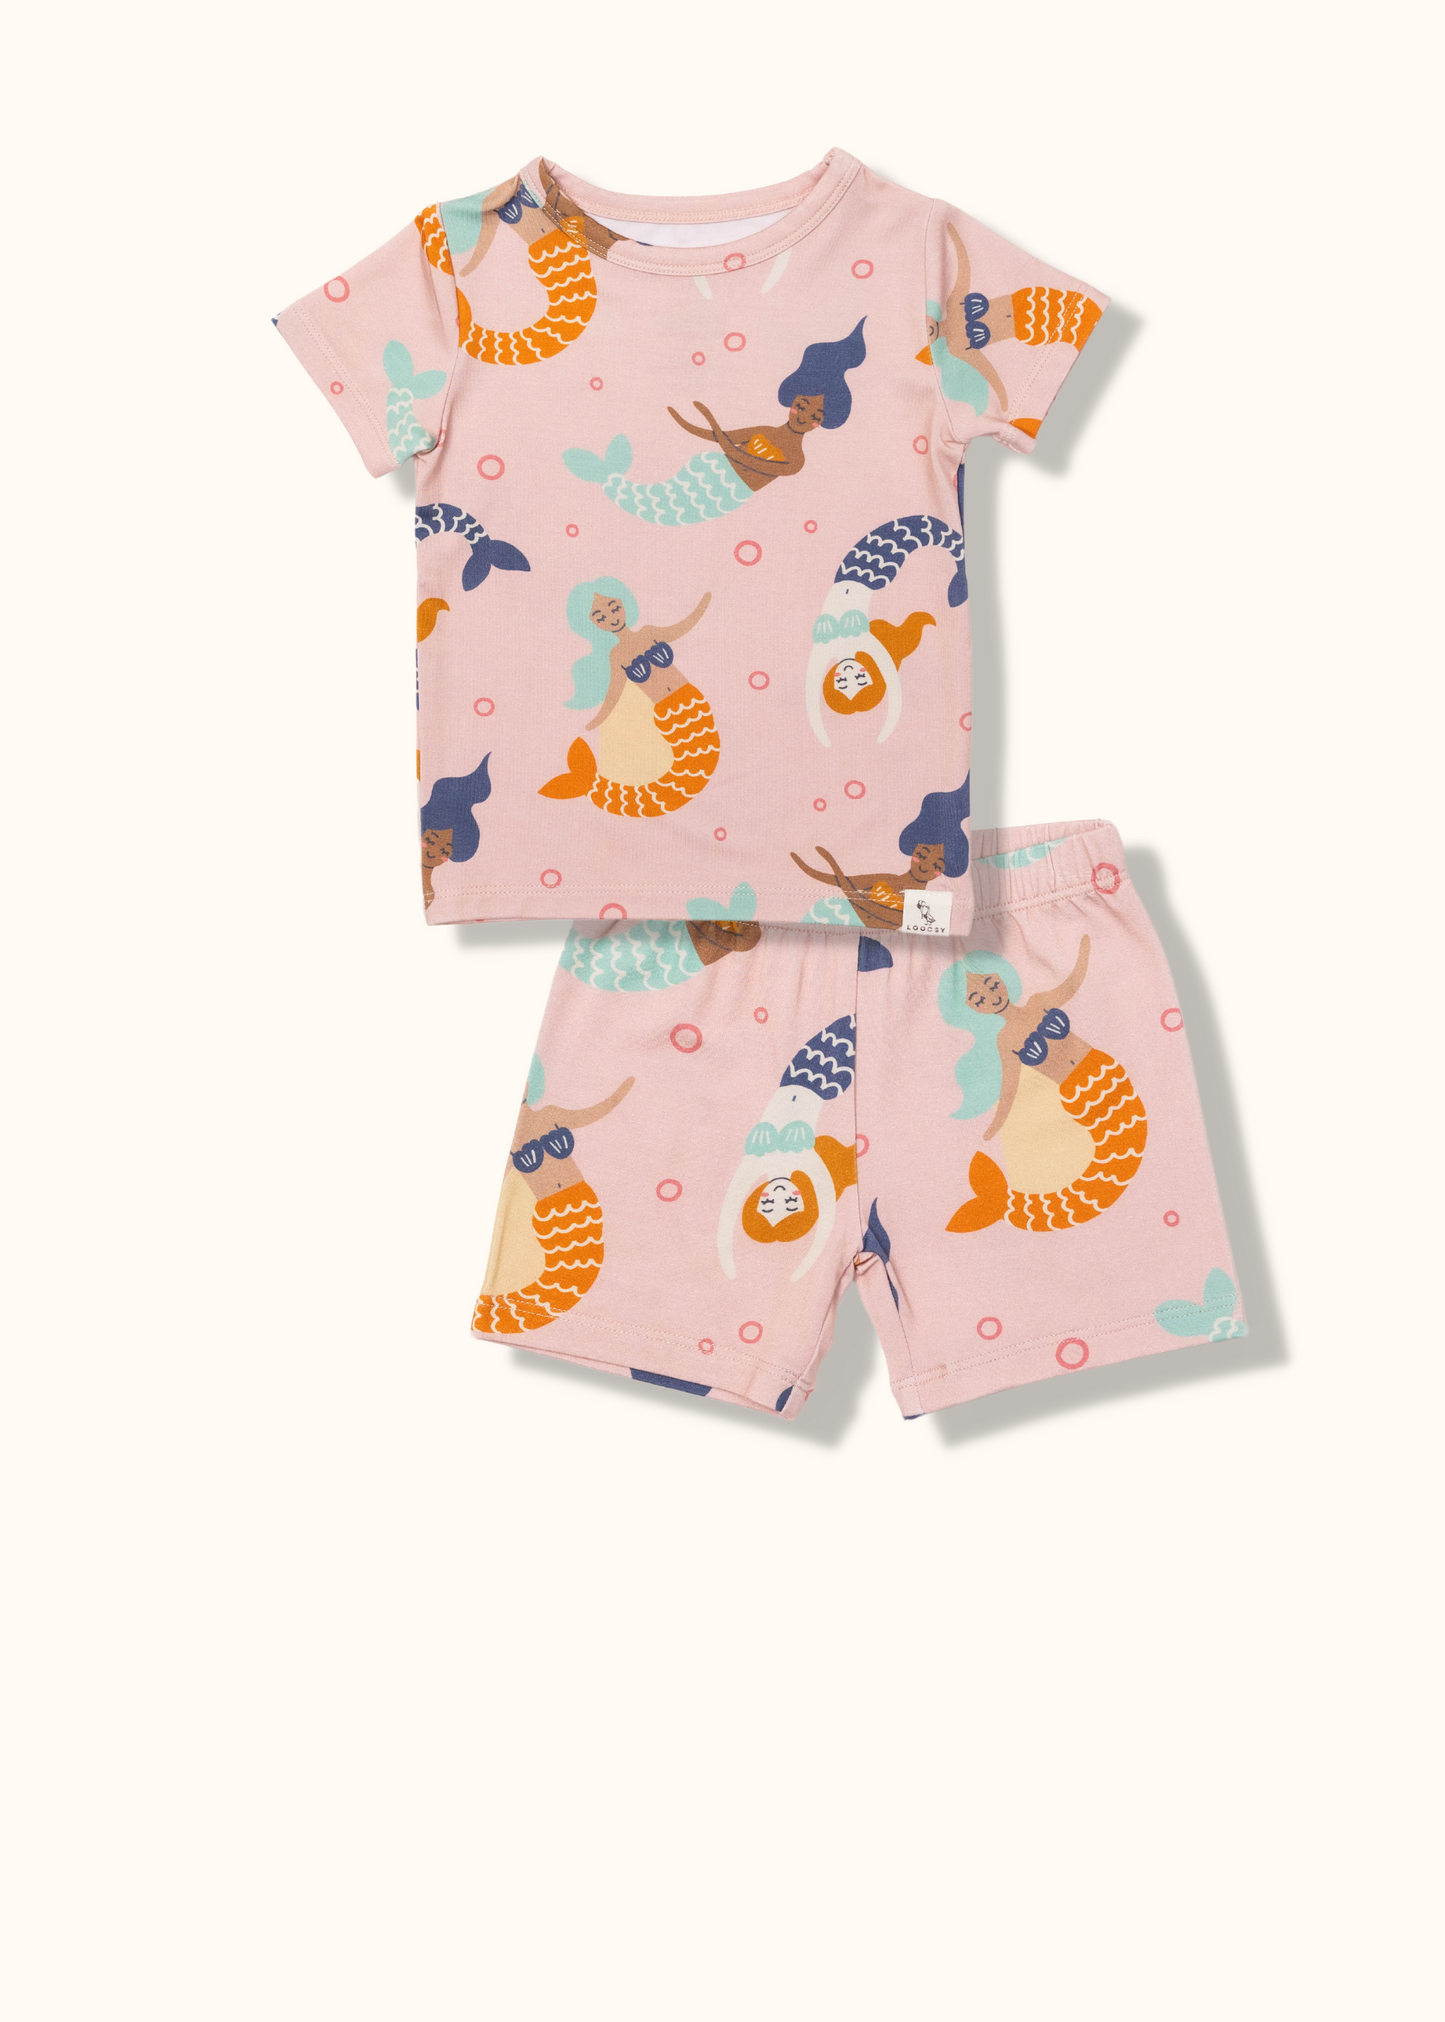 Mermaids Pajama Set by Loocsy